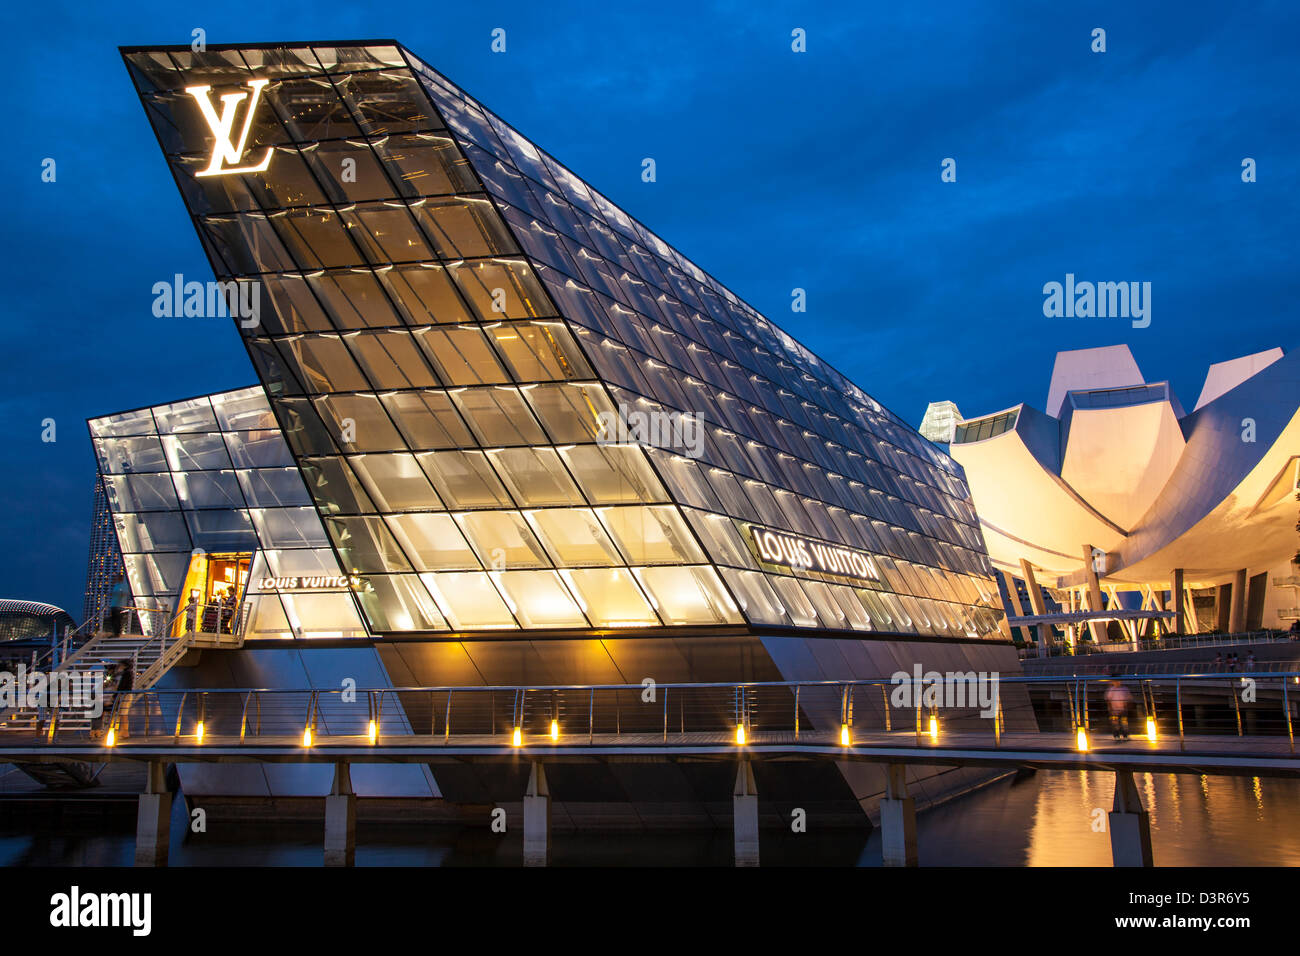 Louis Vuitton island maison, Marina Bay Sands, Singapore Stock Photo: 53985433 - Alamy